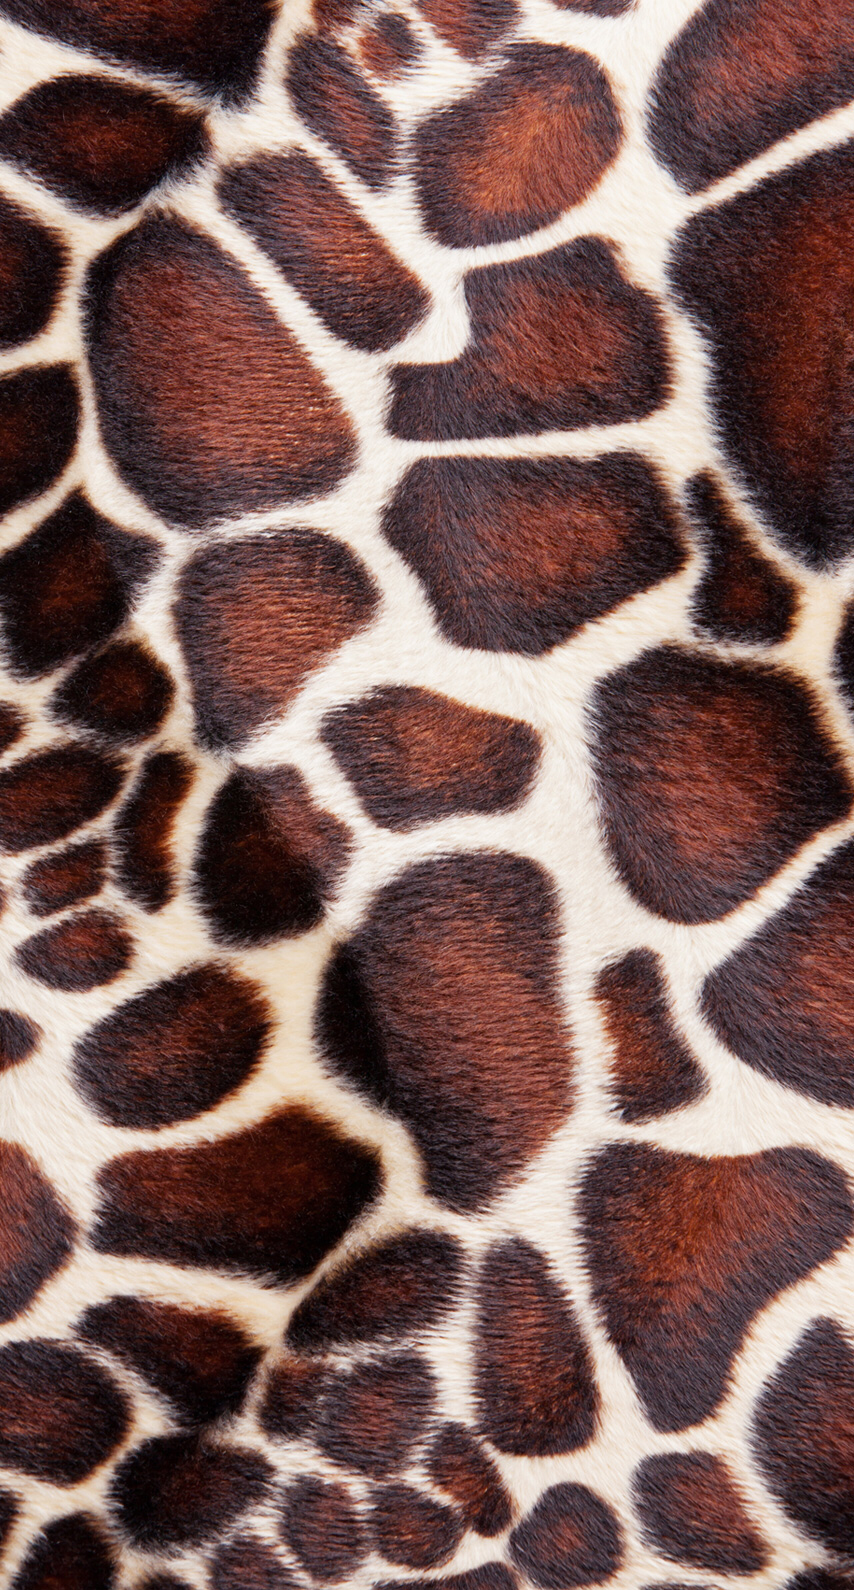 Giraffe skin iPhone wallpaper. Animal print background, Animal print wallpaper, Instagram prints